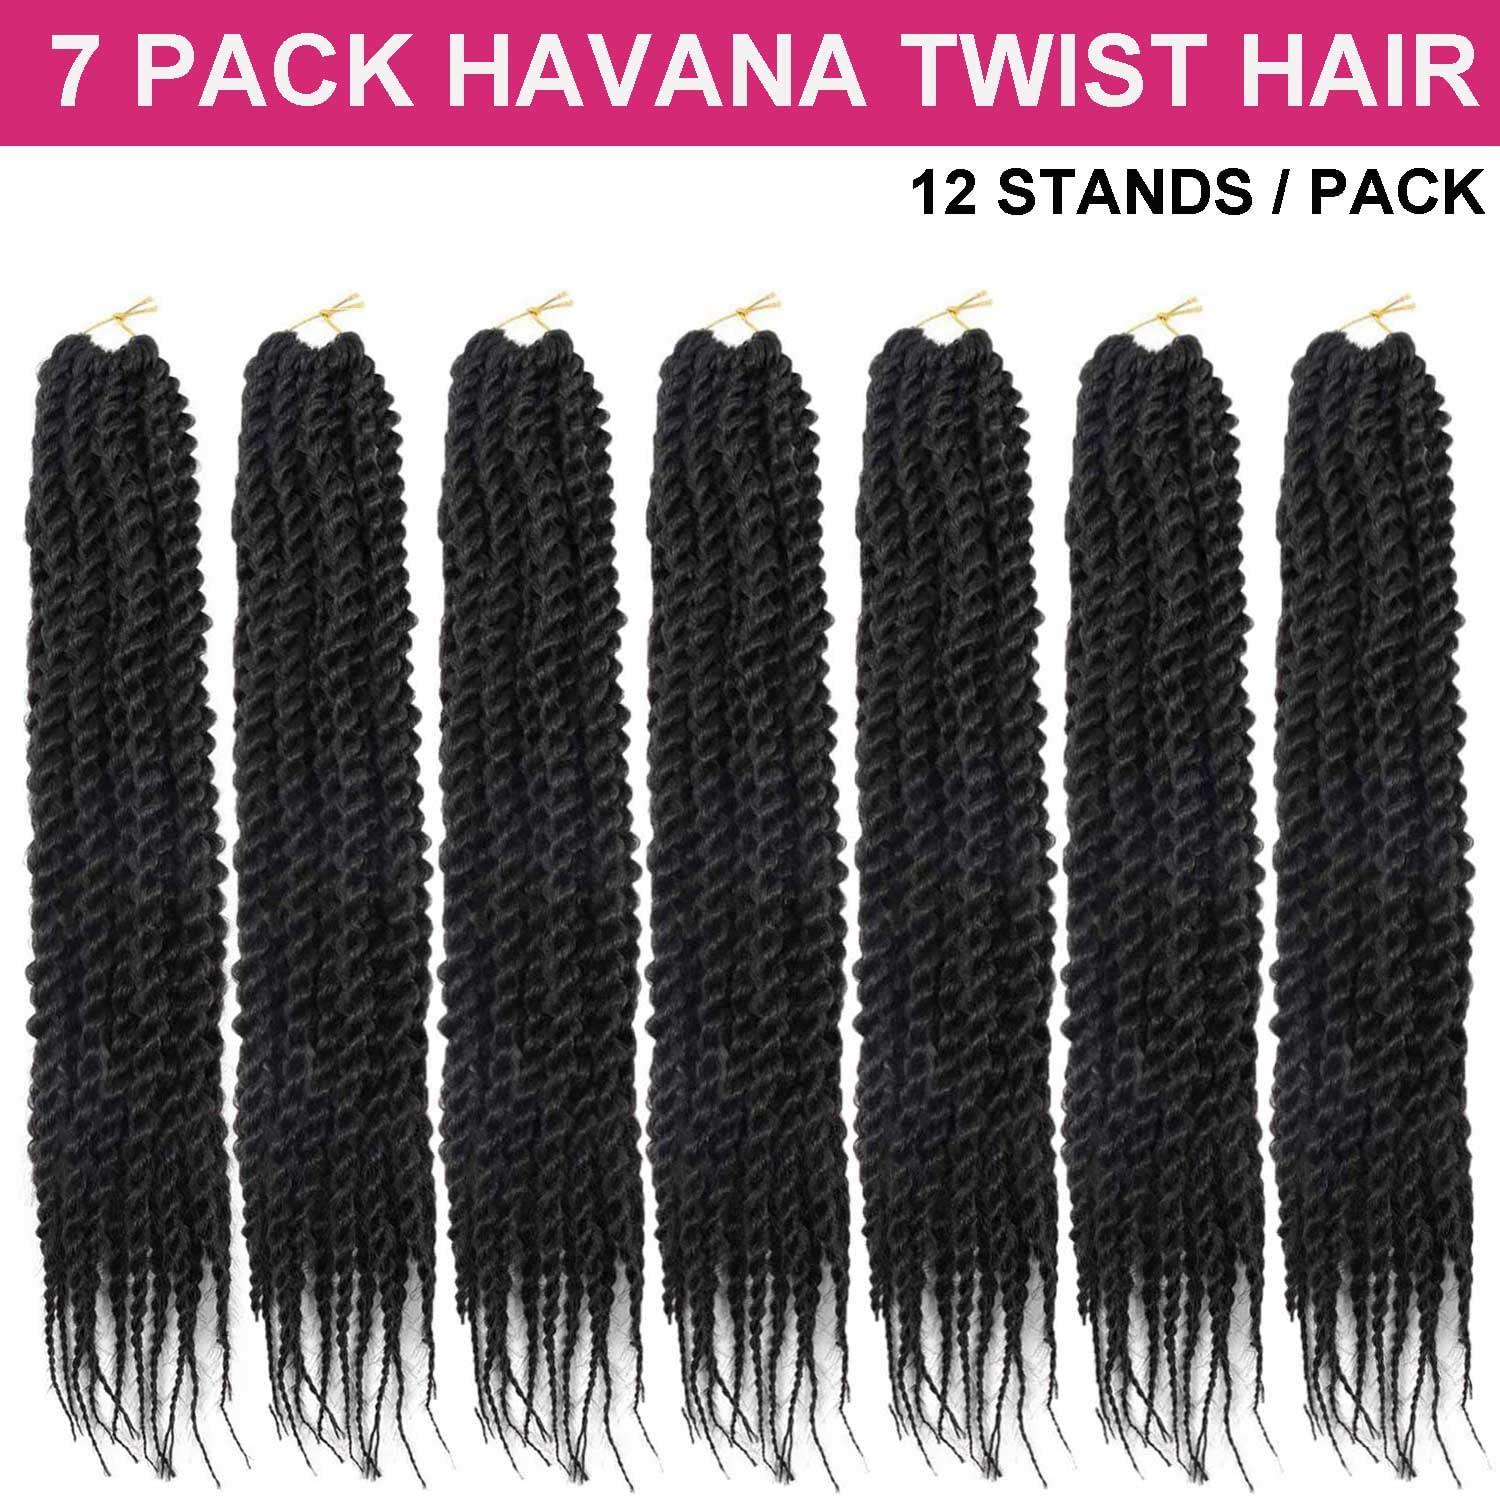 7 Packs Senegalese Twist Crochet Hair 22 Inch Crochet Braids Hair